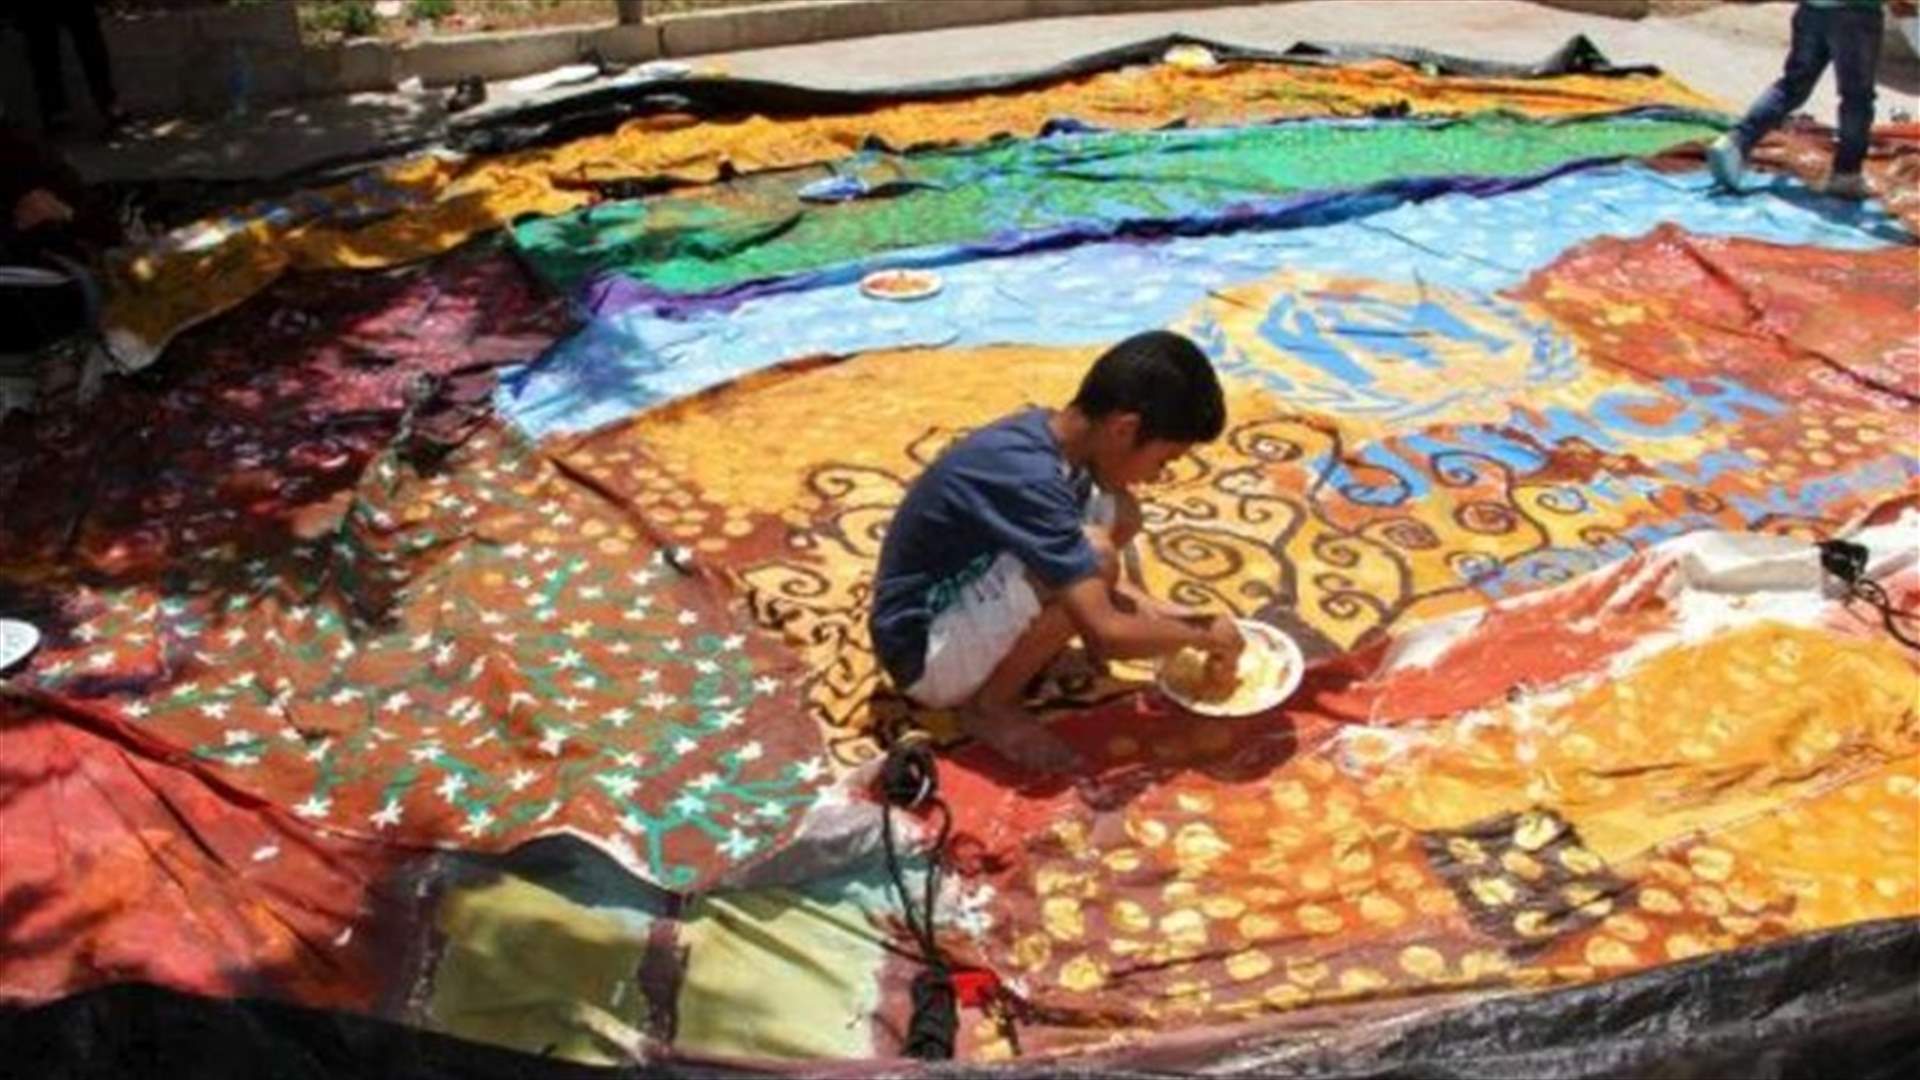 Syrian refugees in Jordan transform tents into art